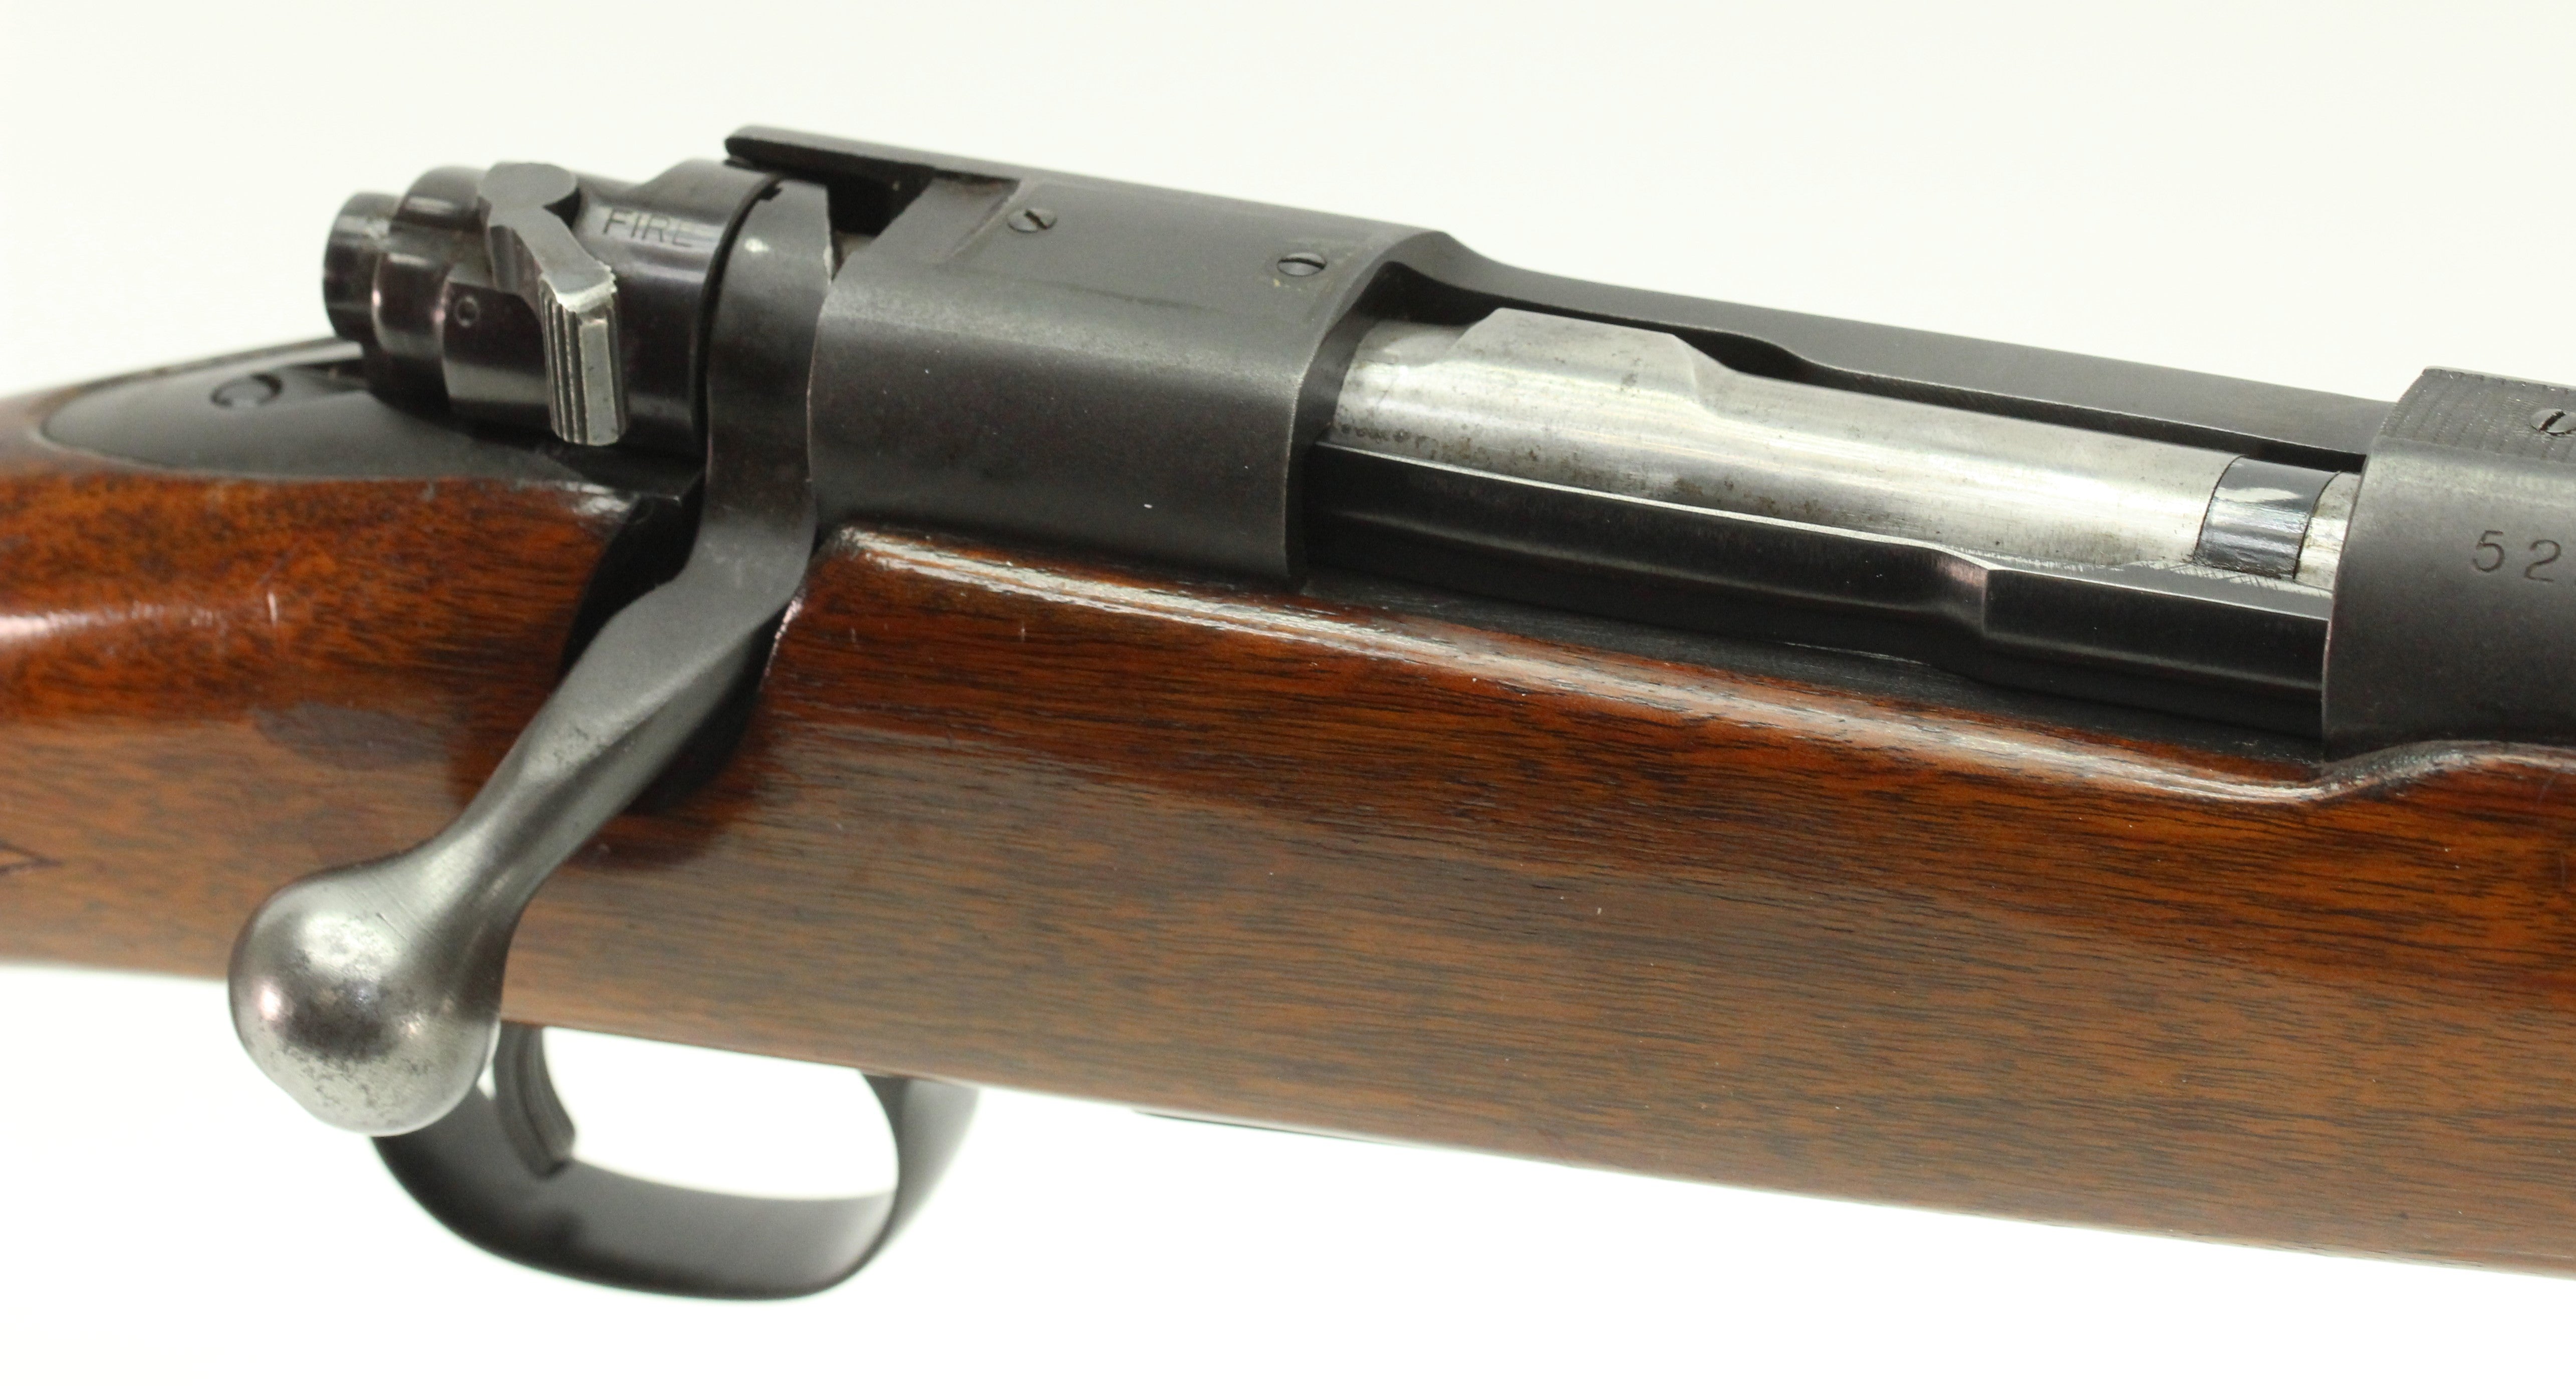 .270 Win Featherweight Rifle - 1961